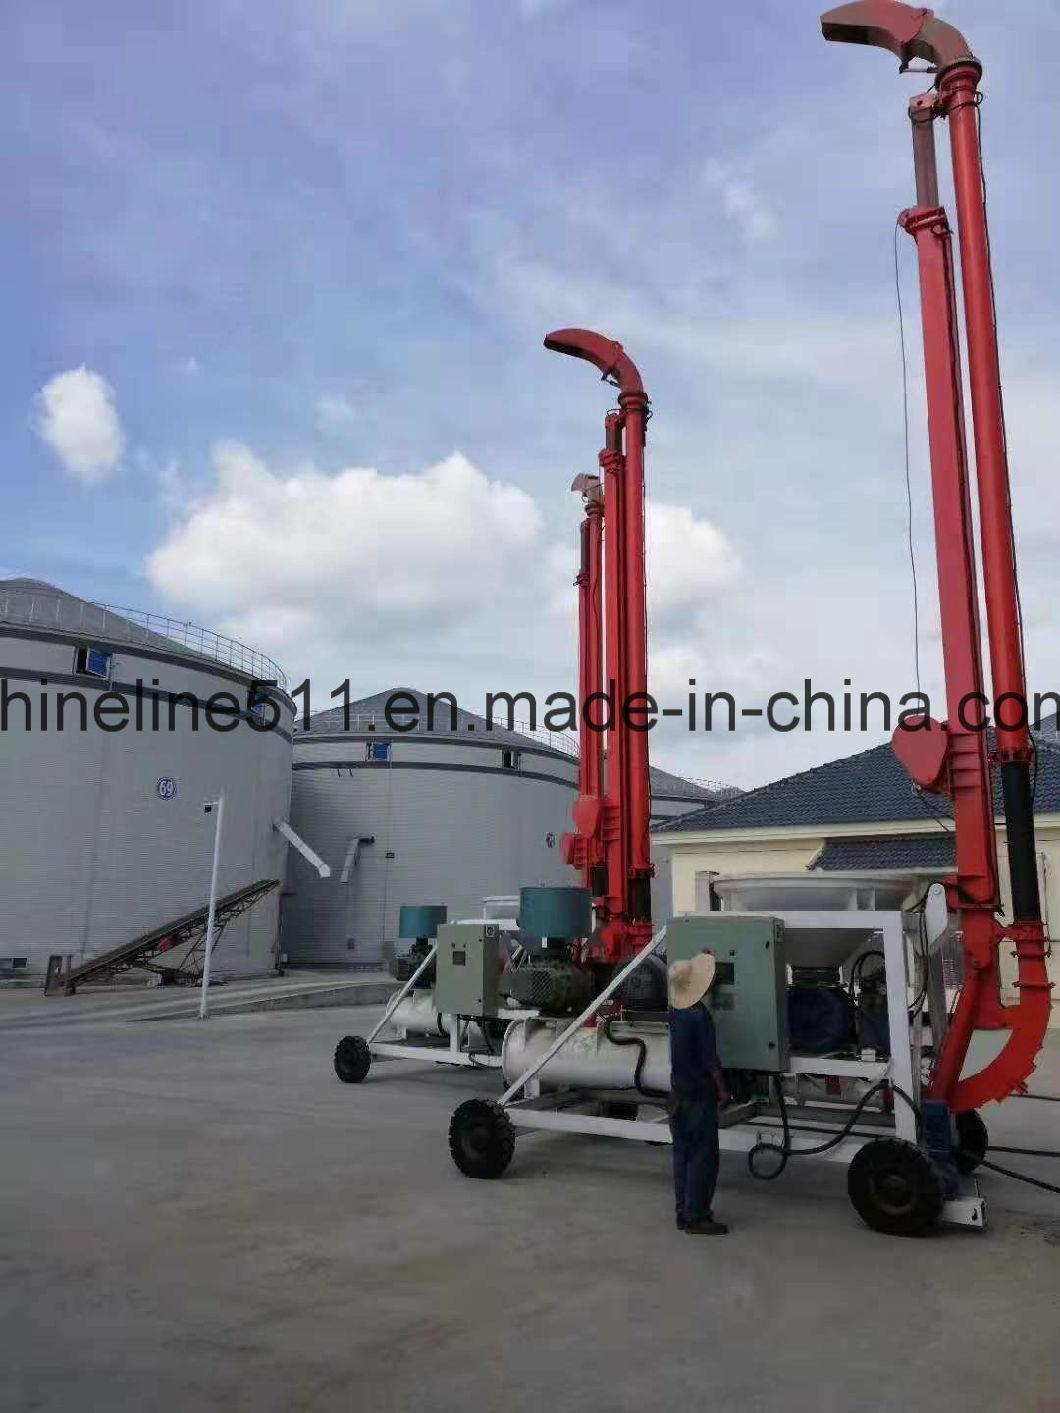 Hunan Xiangliang Machinery Manufacture Co., Ltd. Gran Pump Port Unloader